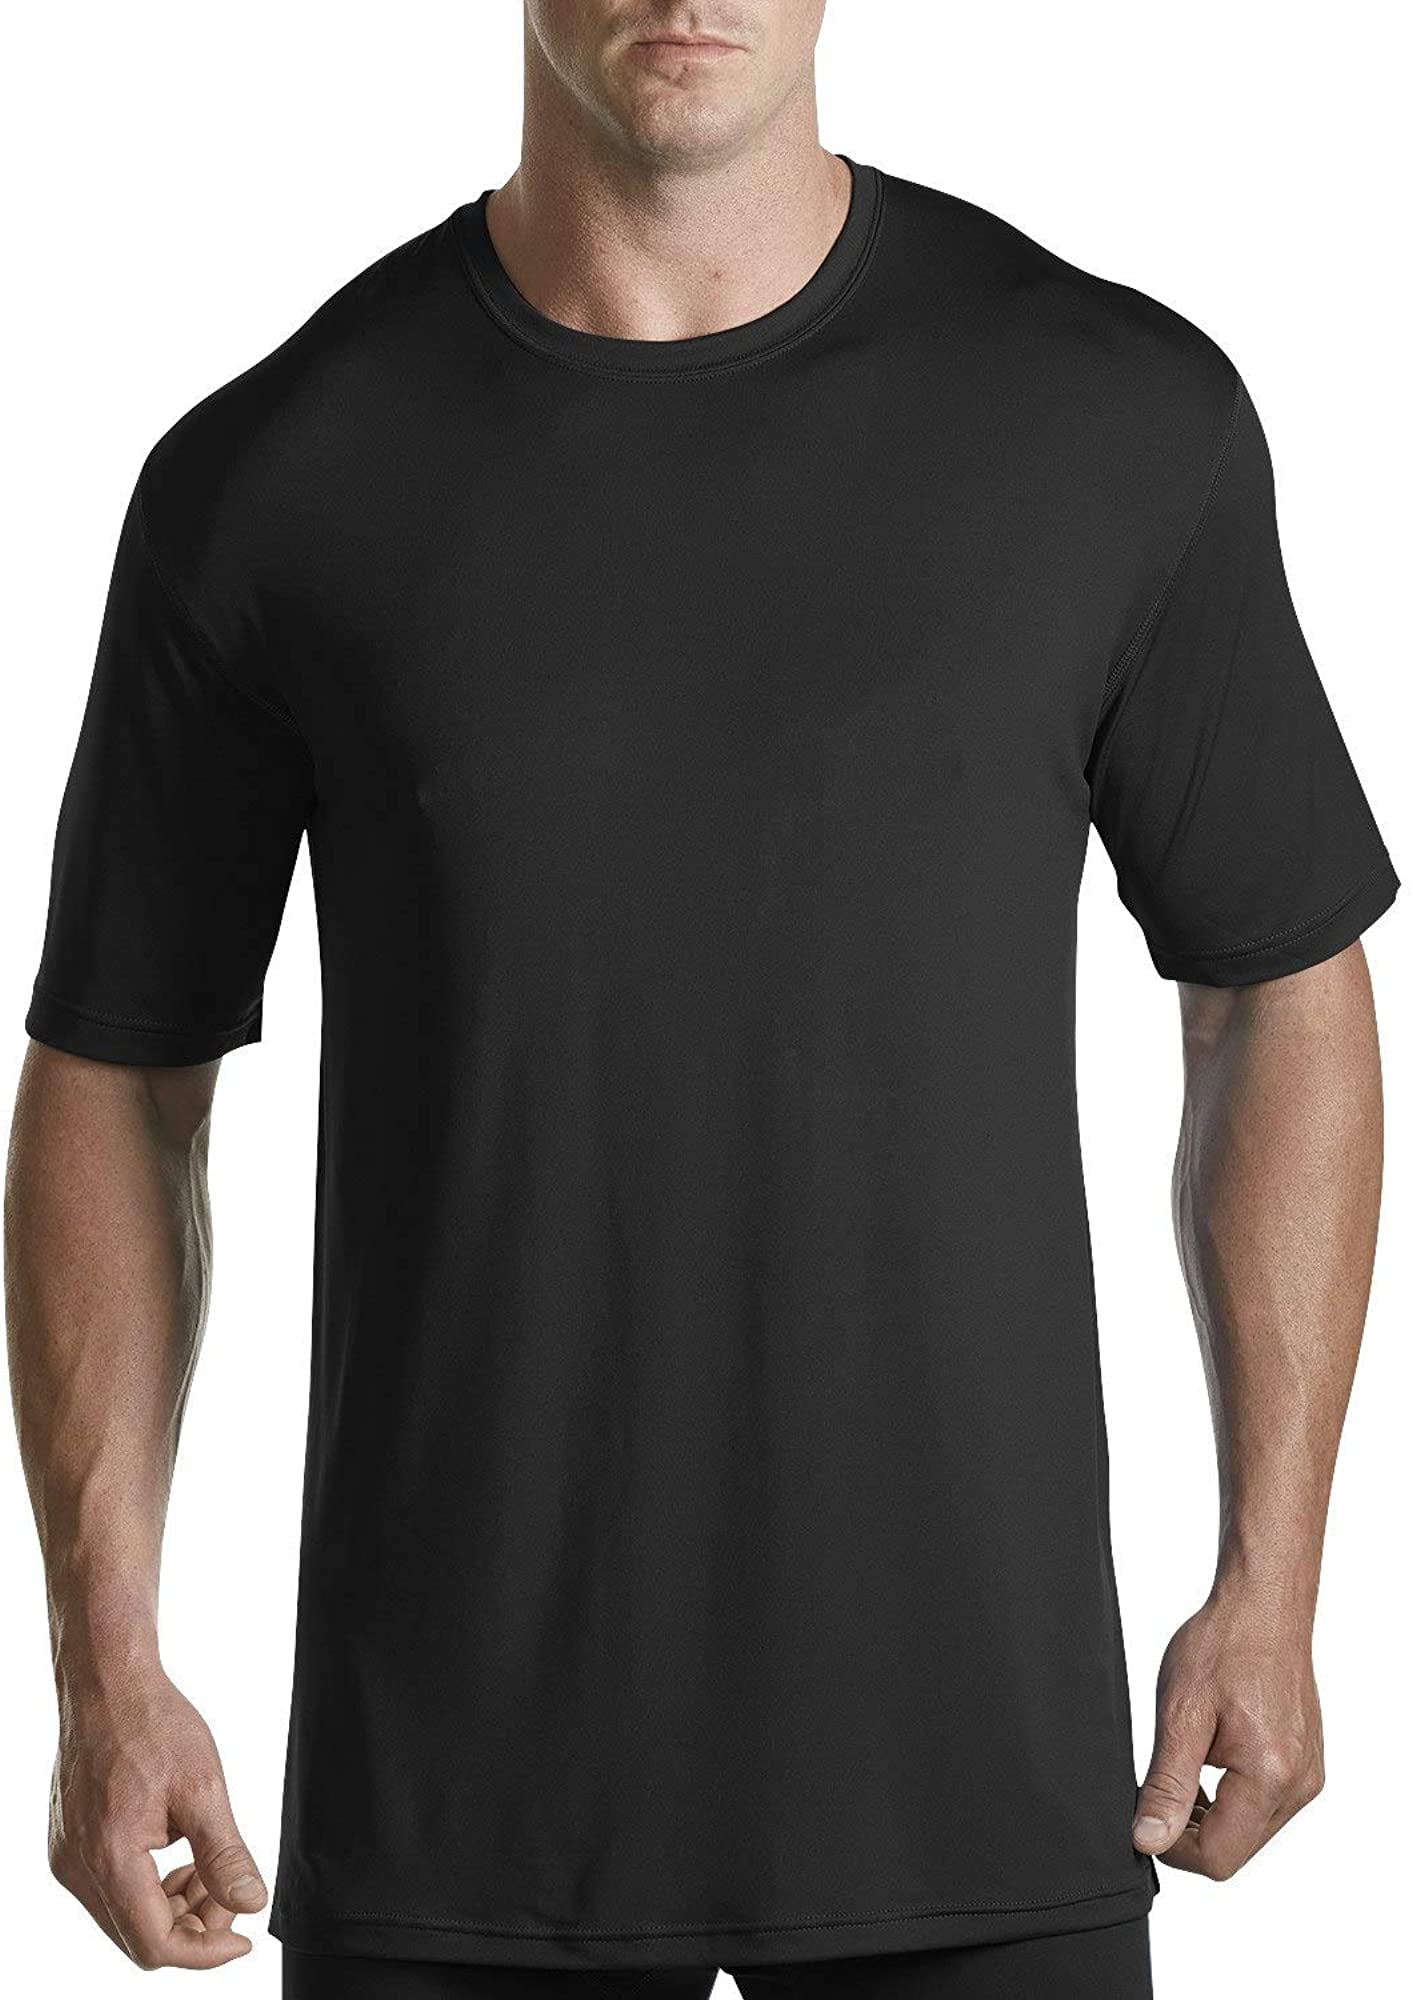 Essentials Mens Big & Tall Performance Cotton Short-Sleeve T-Shirt fit by DXL